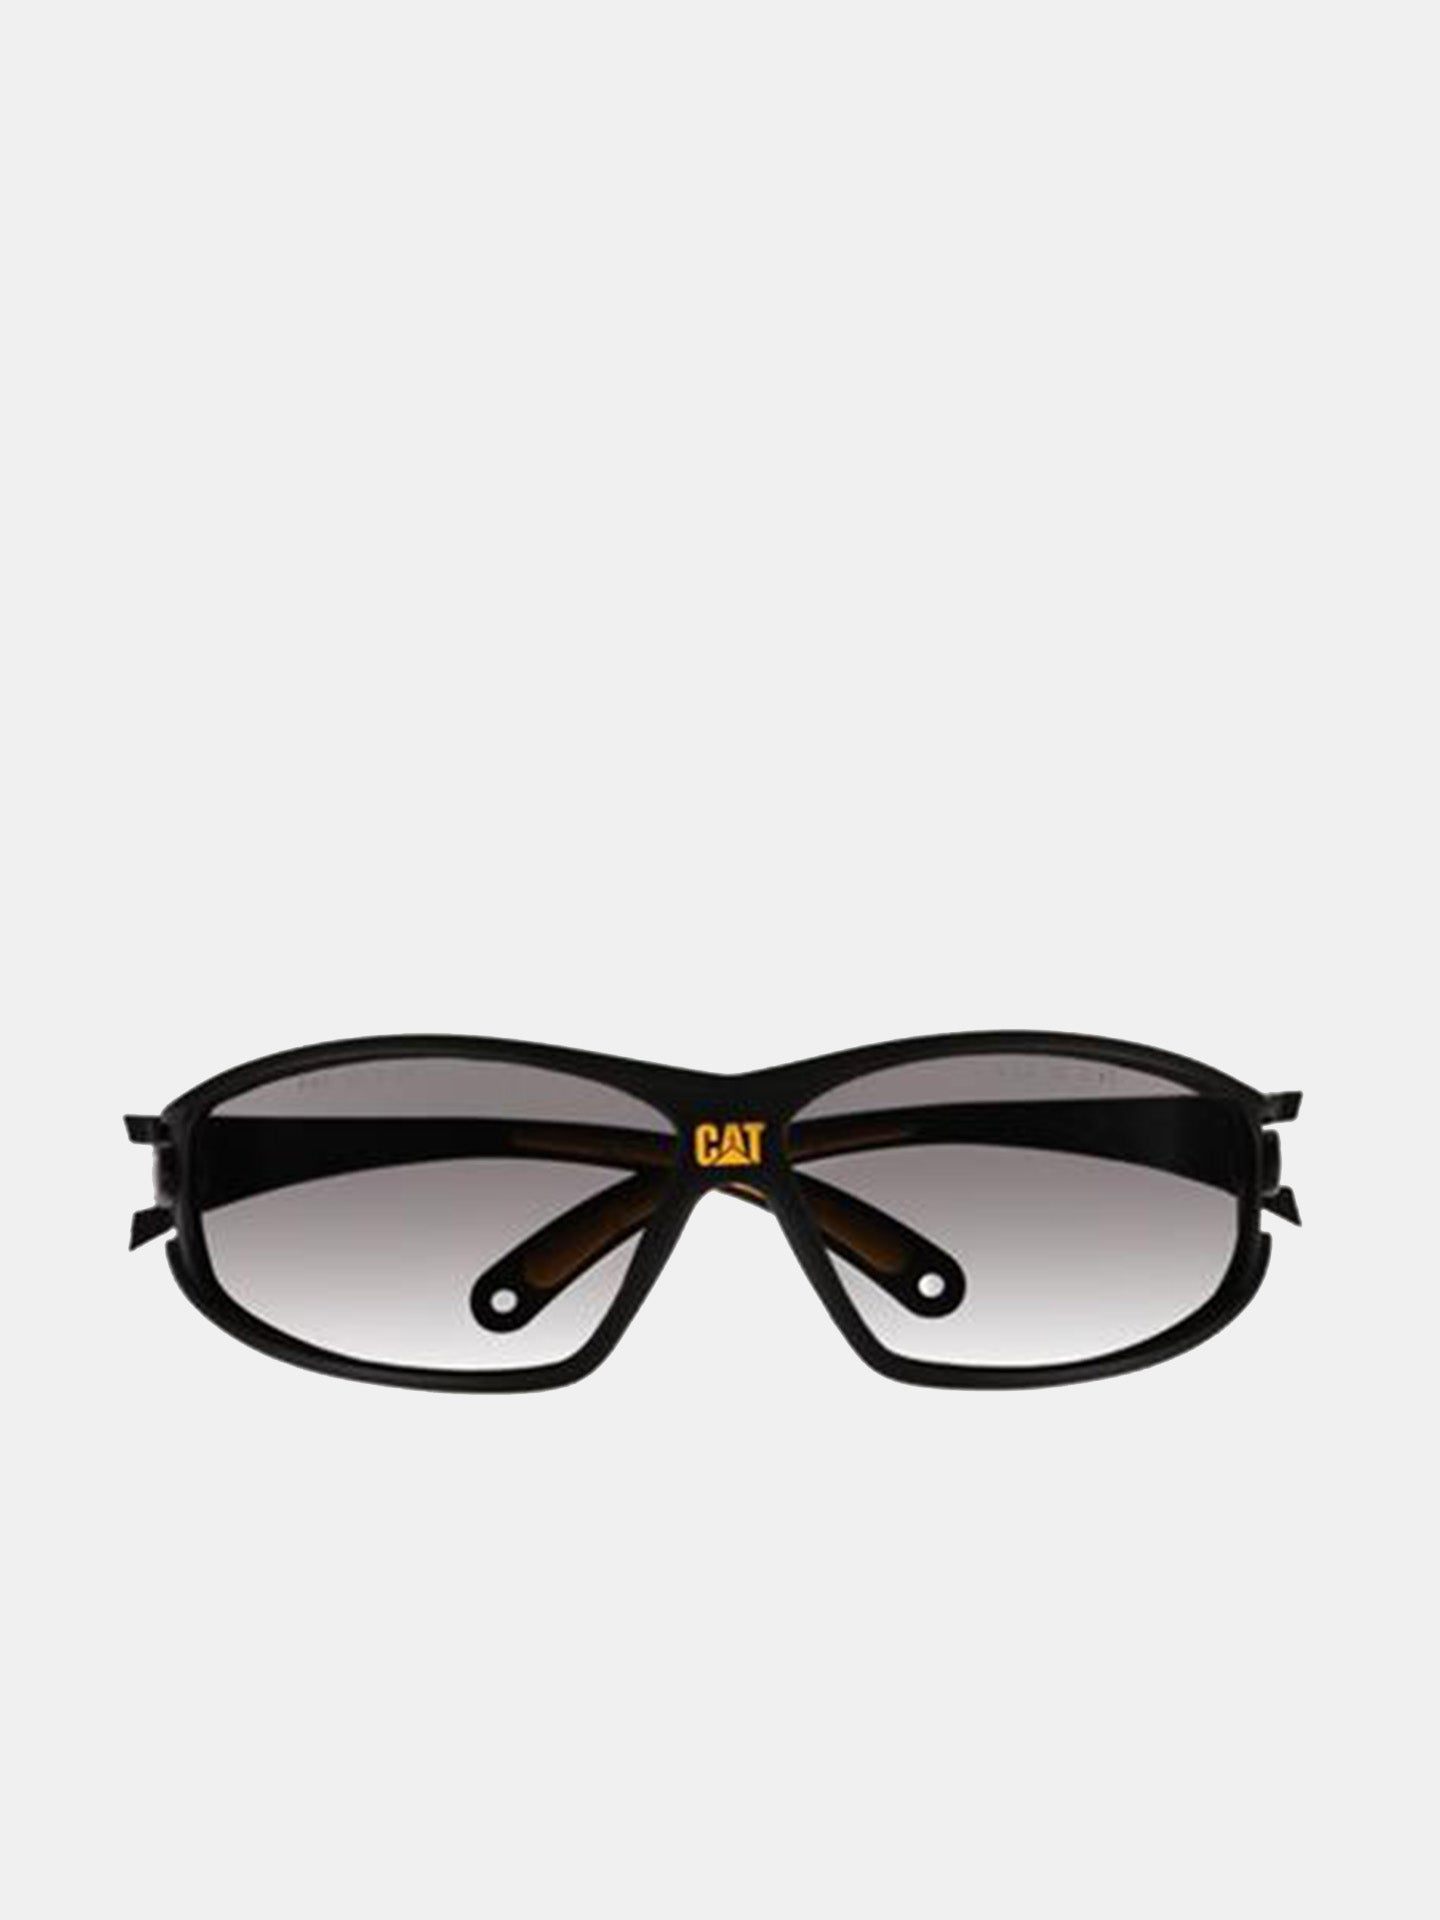 Caterpillar CSA-TREAD-105 Safety Glasses